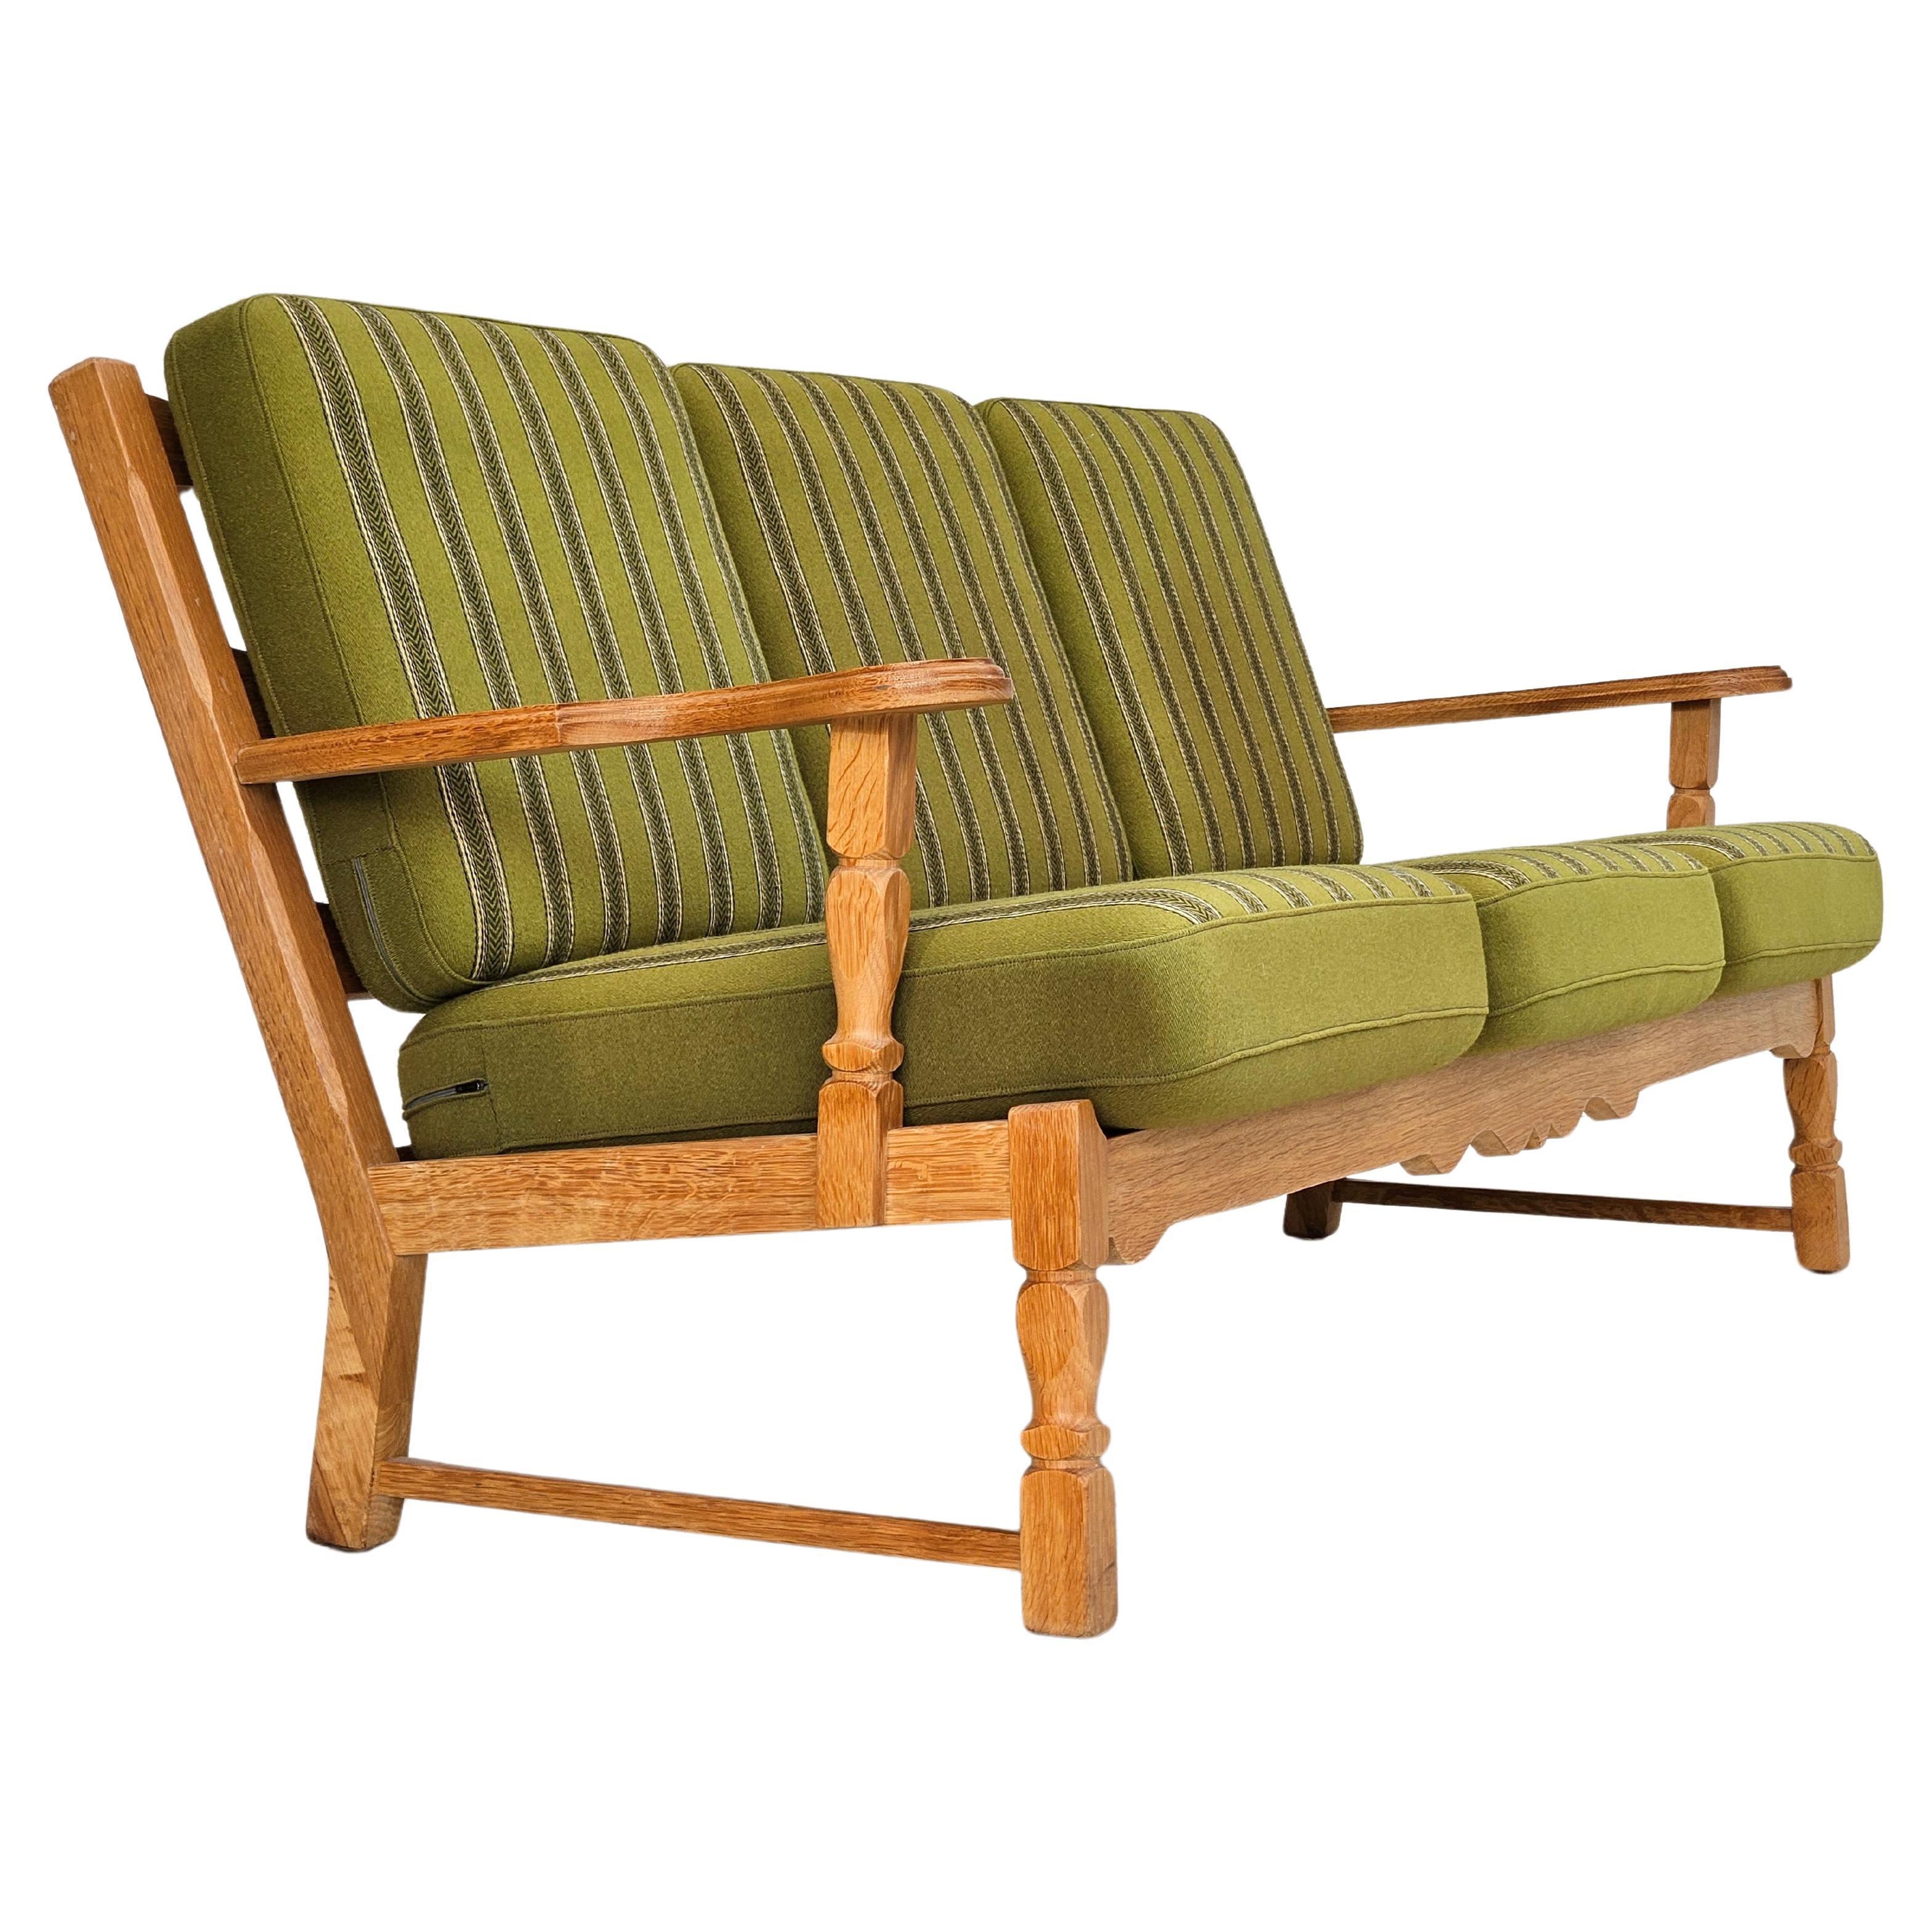 1970s, Danish design, 3 seater sofa, original condition, solid oak wood, furni For Sale